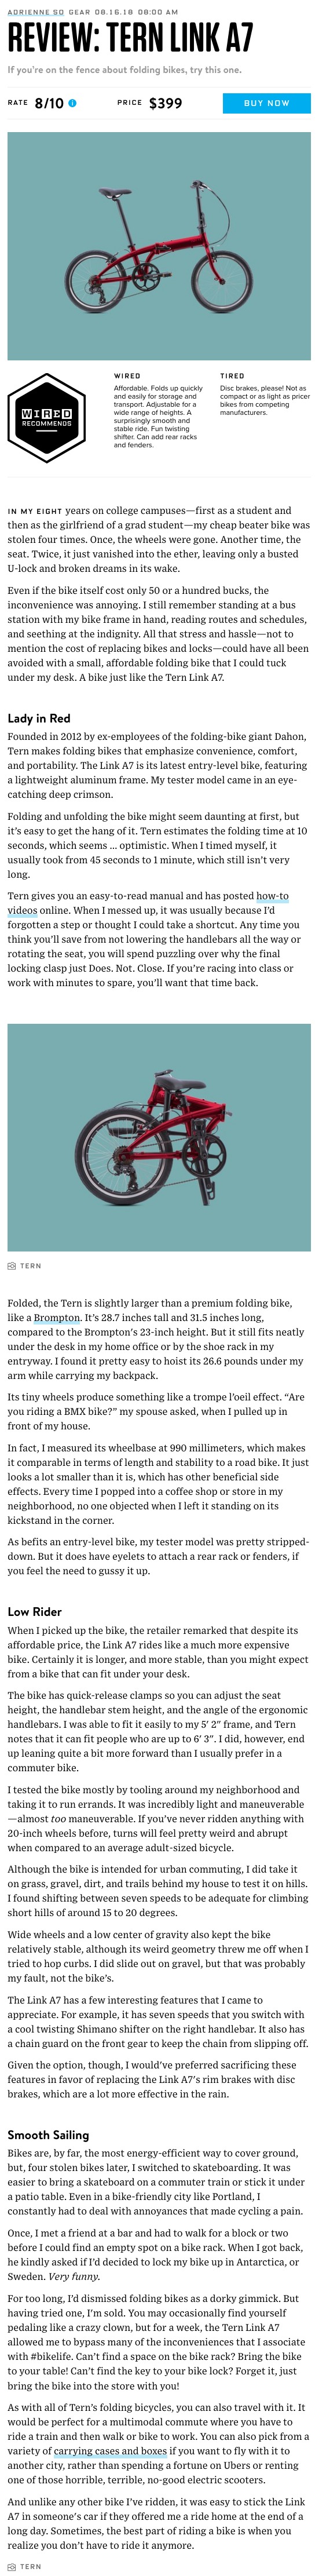 tern a7 folding bike